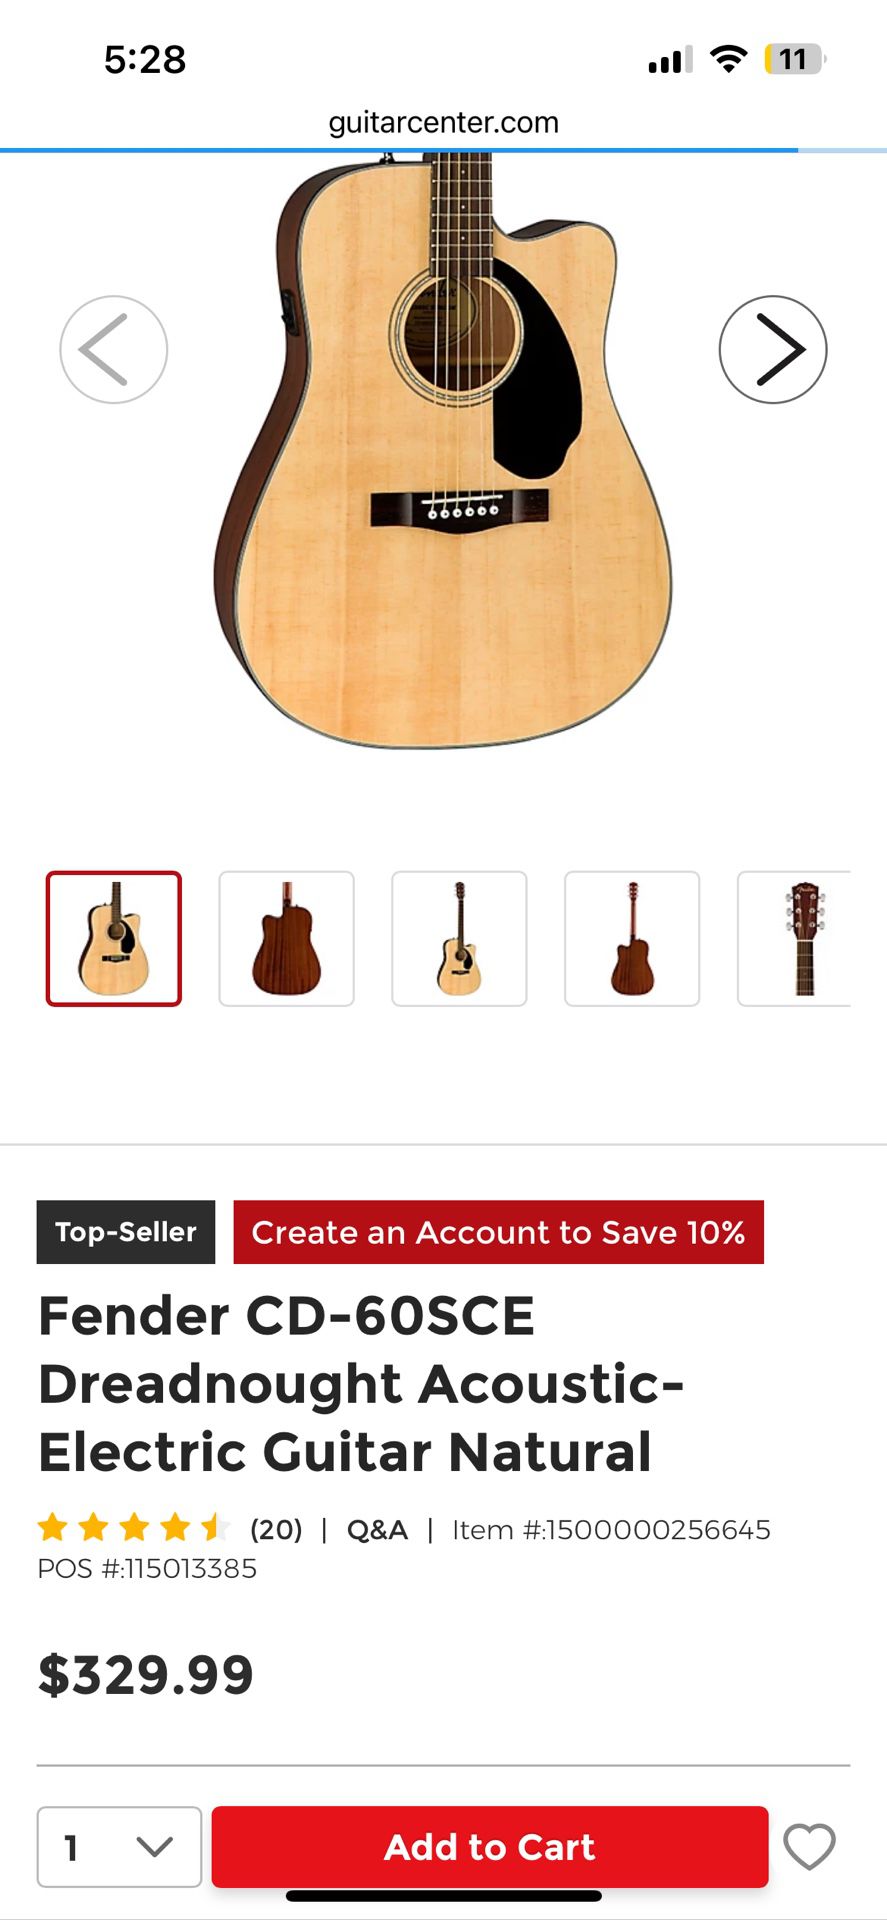 Fender Guitar Sale $120